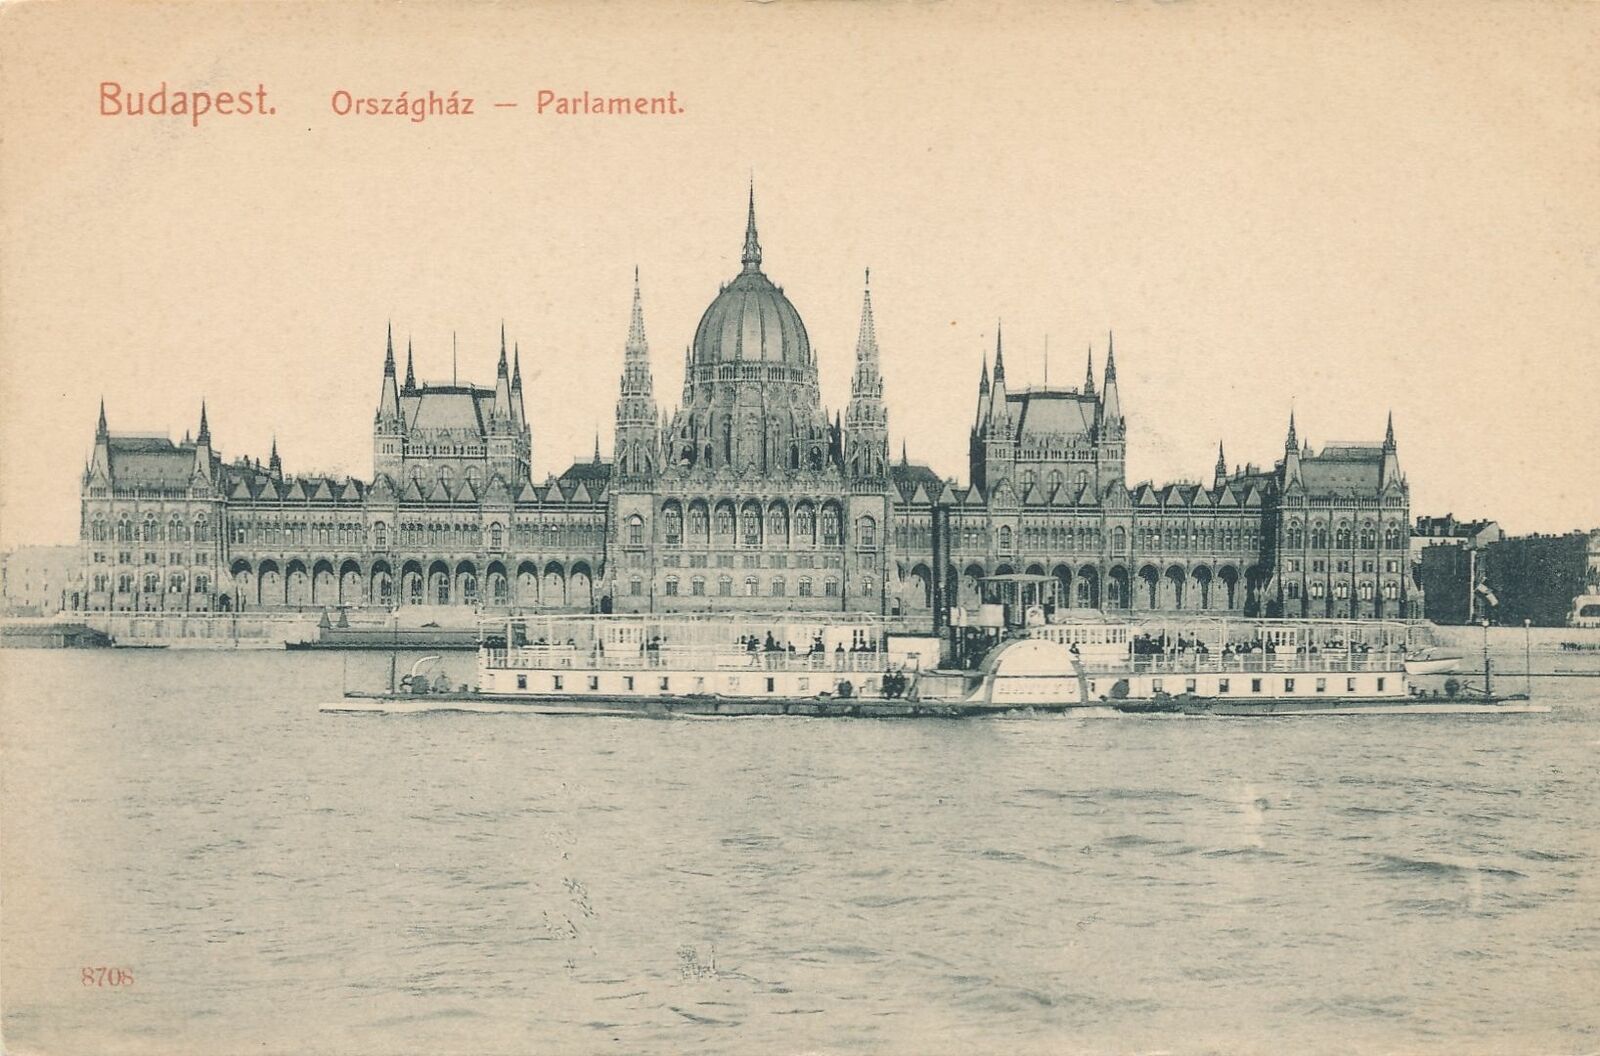 BUDAPEST - Orszaghaz Parliament - Hungary